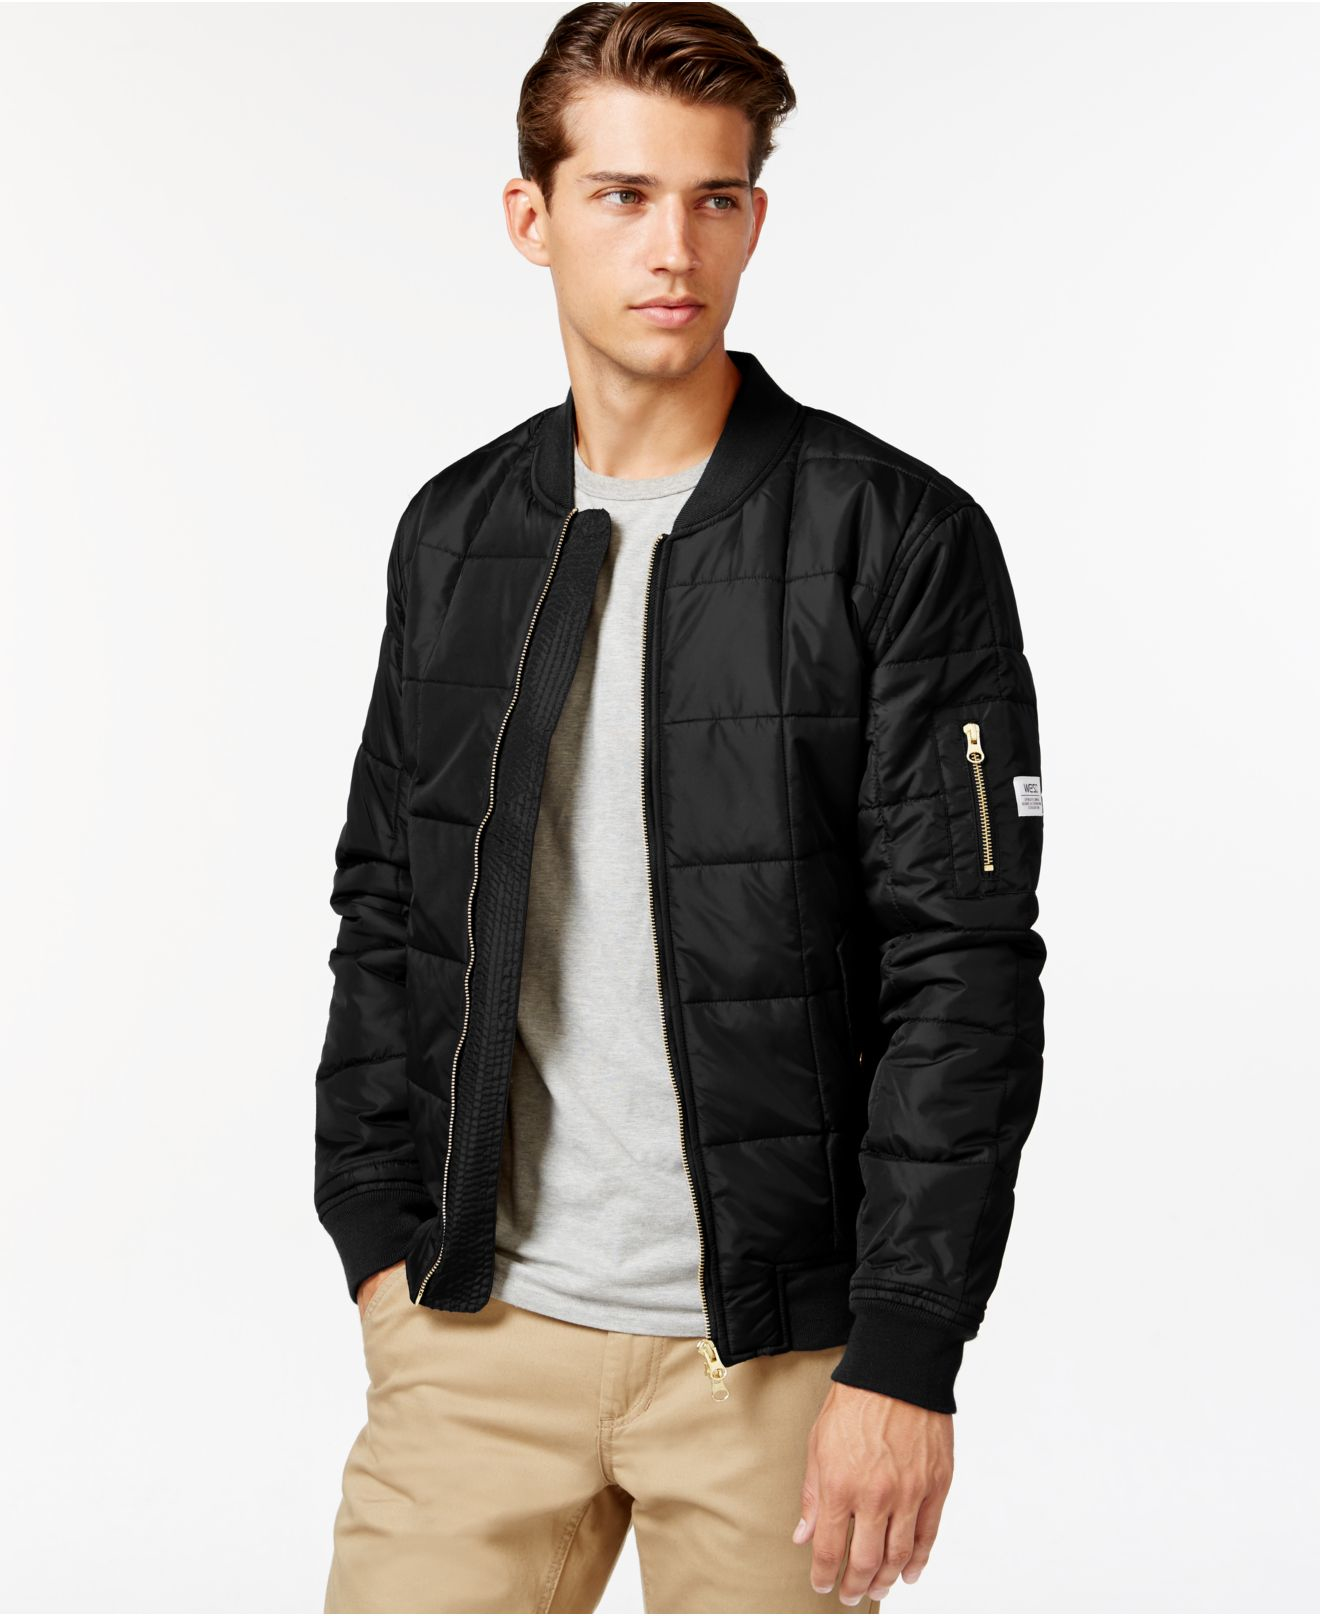 Wesc Rami Quilted Zip-front Jacket in Black for Men - Lyst